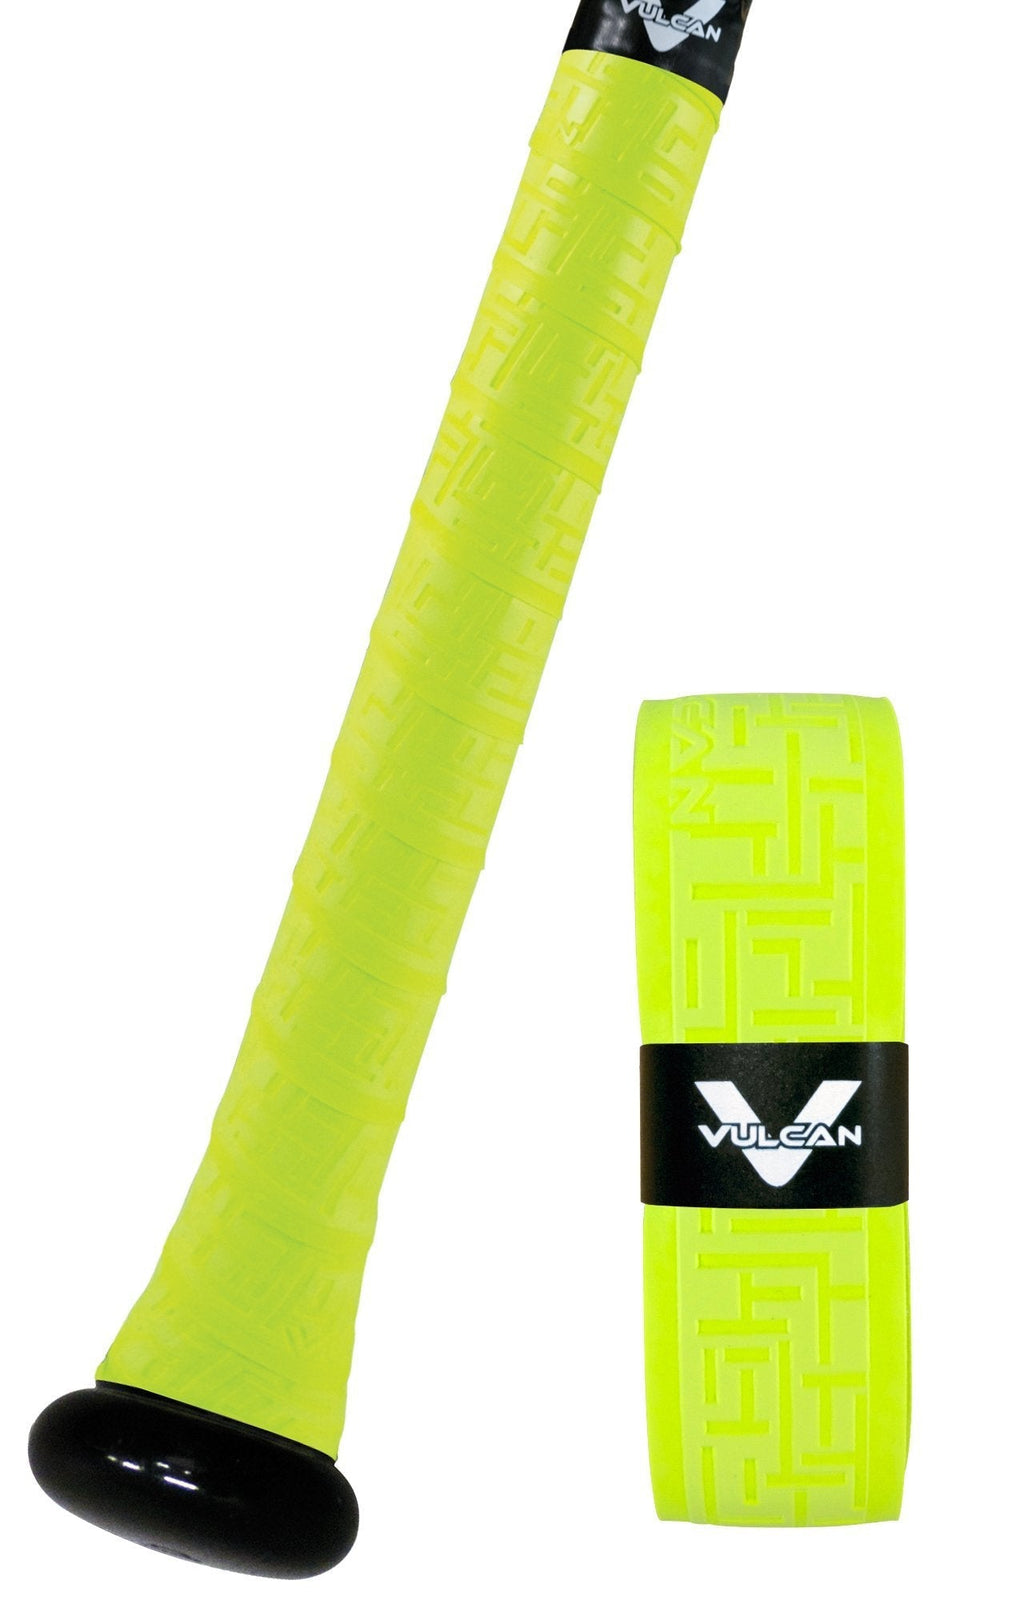 [AUSTRALIA] - Vulcan Bat Grip, Vulcan 1.75mm Bat Grip, Optic Yellow 